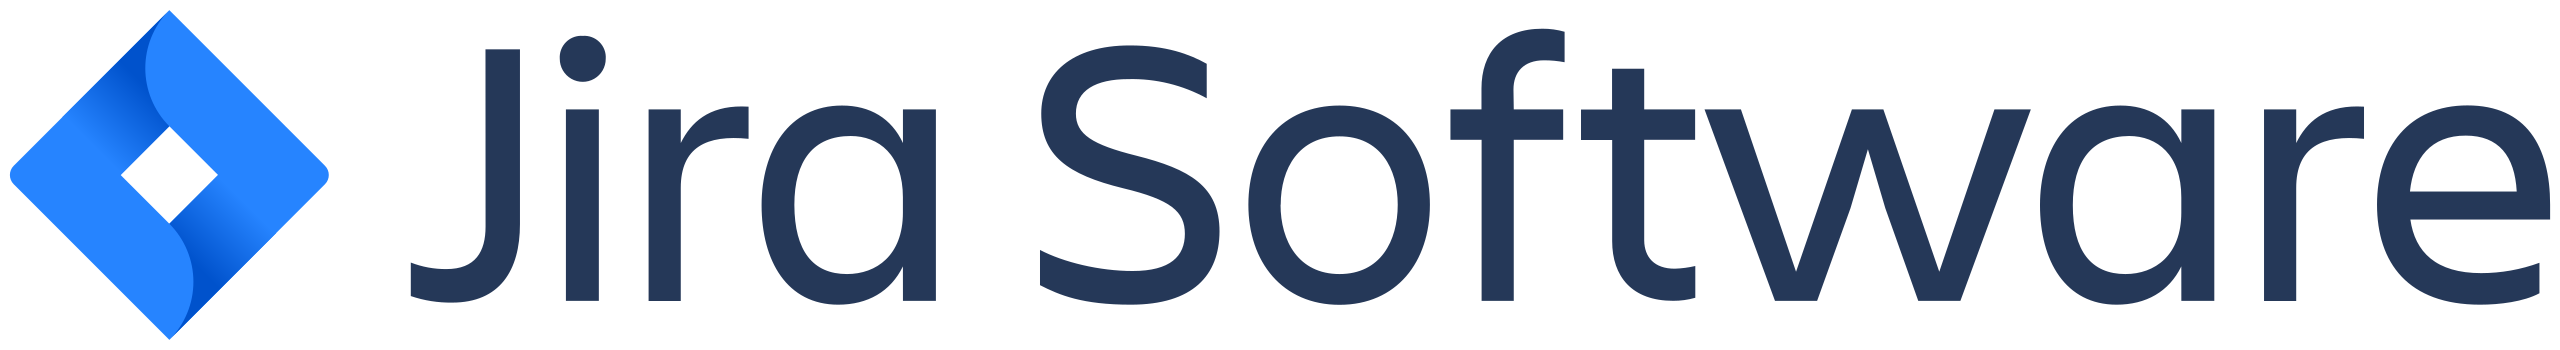 jira-software-logo-png